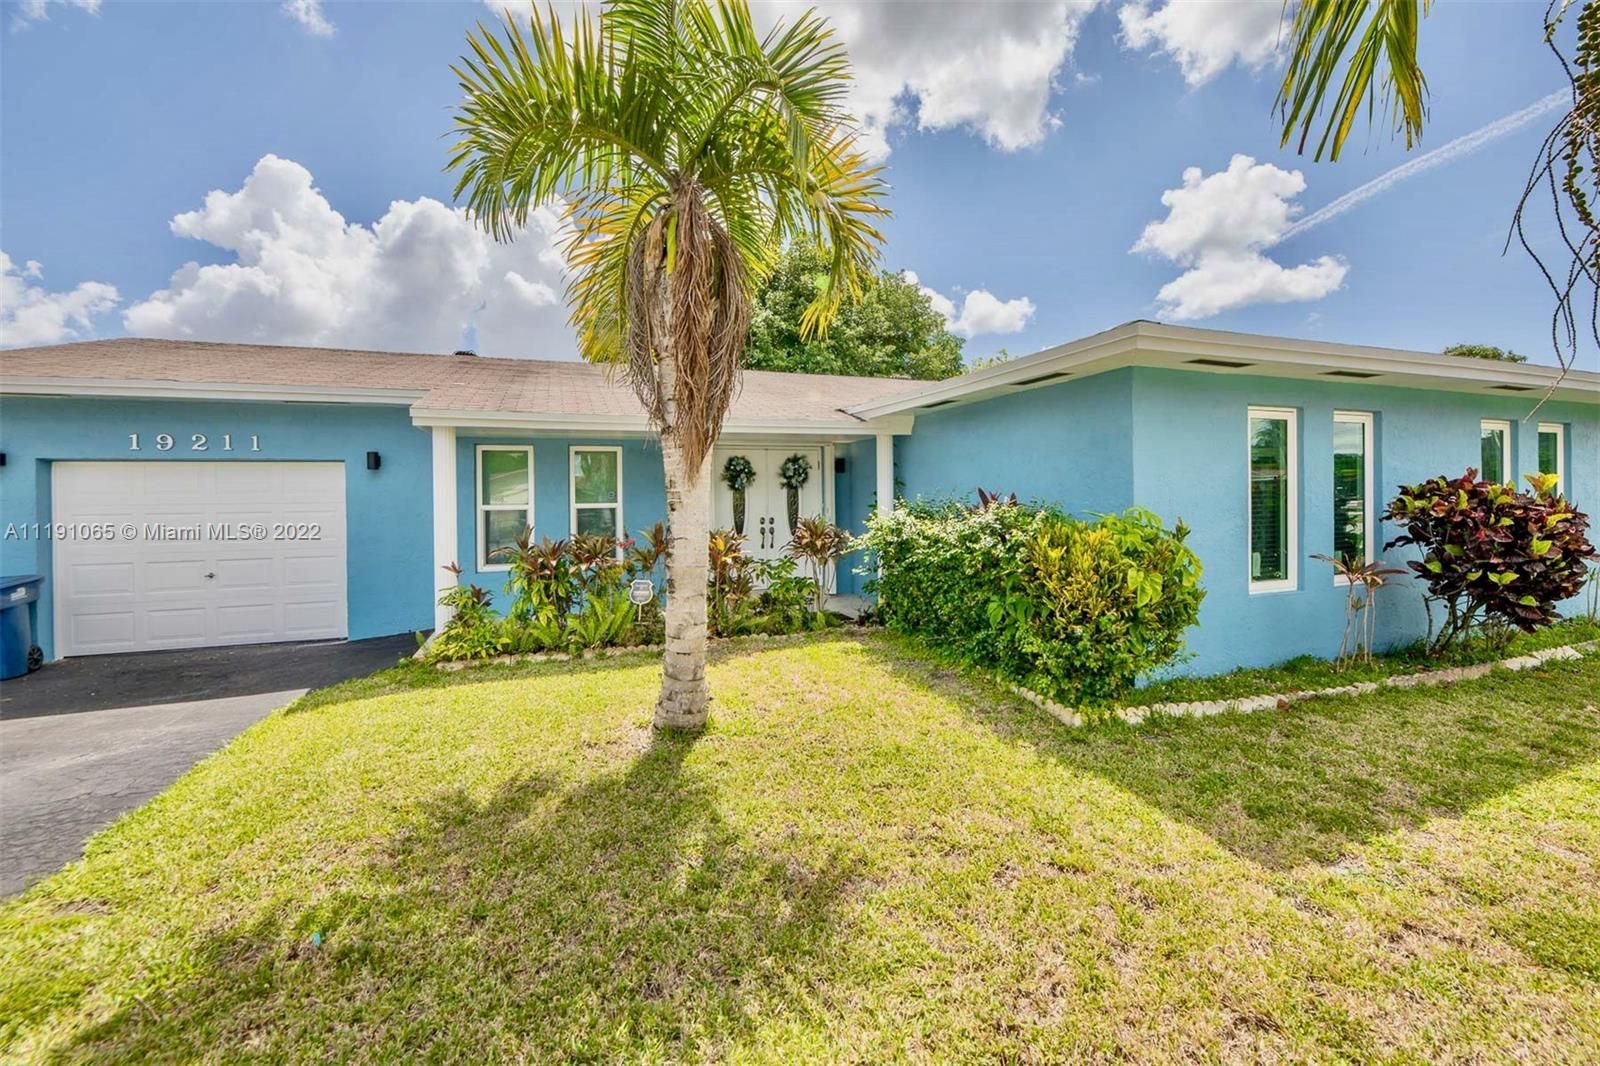 Real estate property located at 19211 19th Ave, Miami-Dade County, Miami Gardens, FL